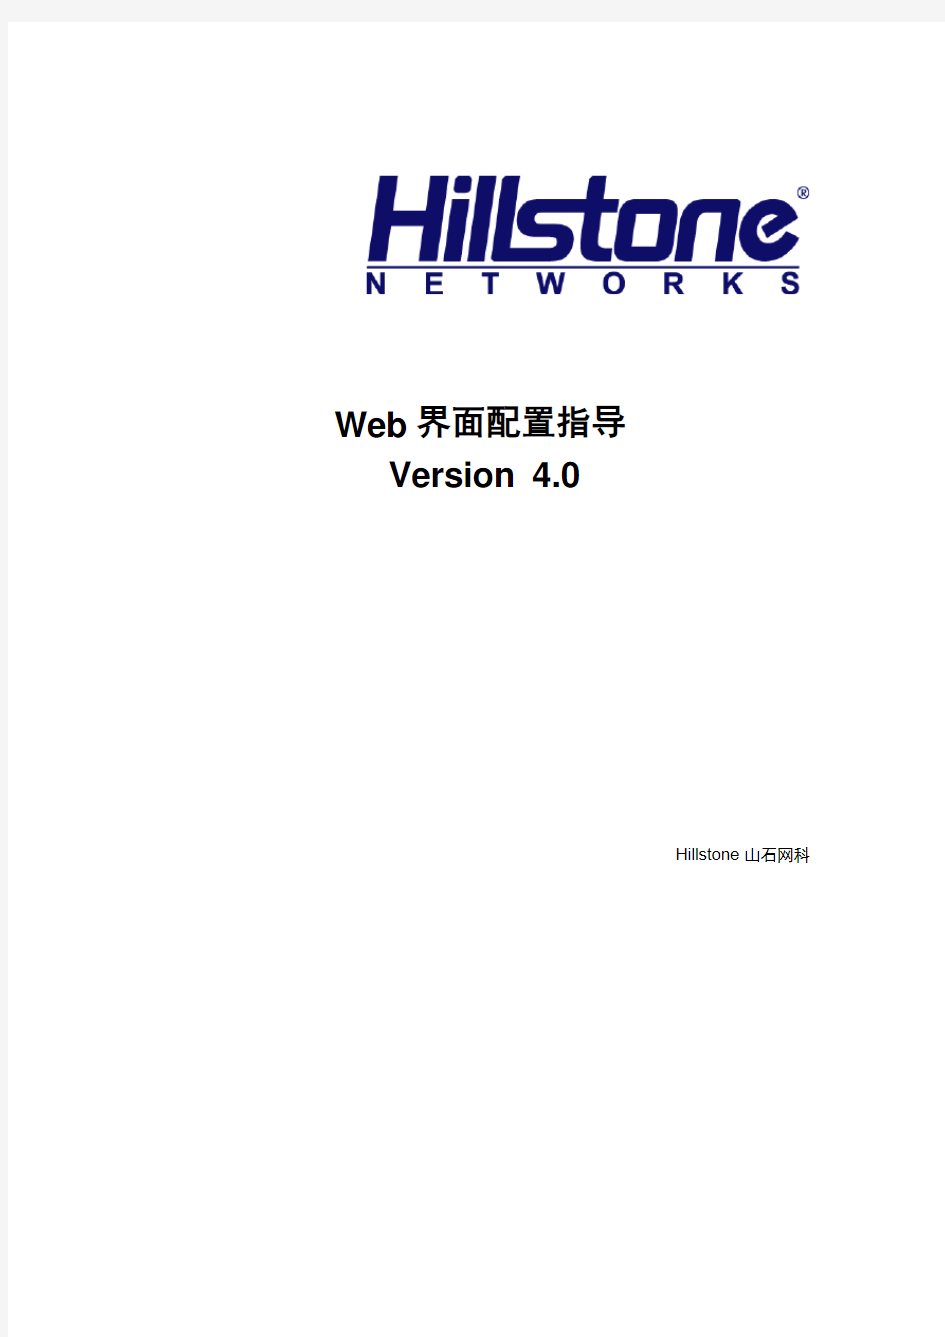 Hillstone 安全网关 Web 界面配置指导